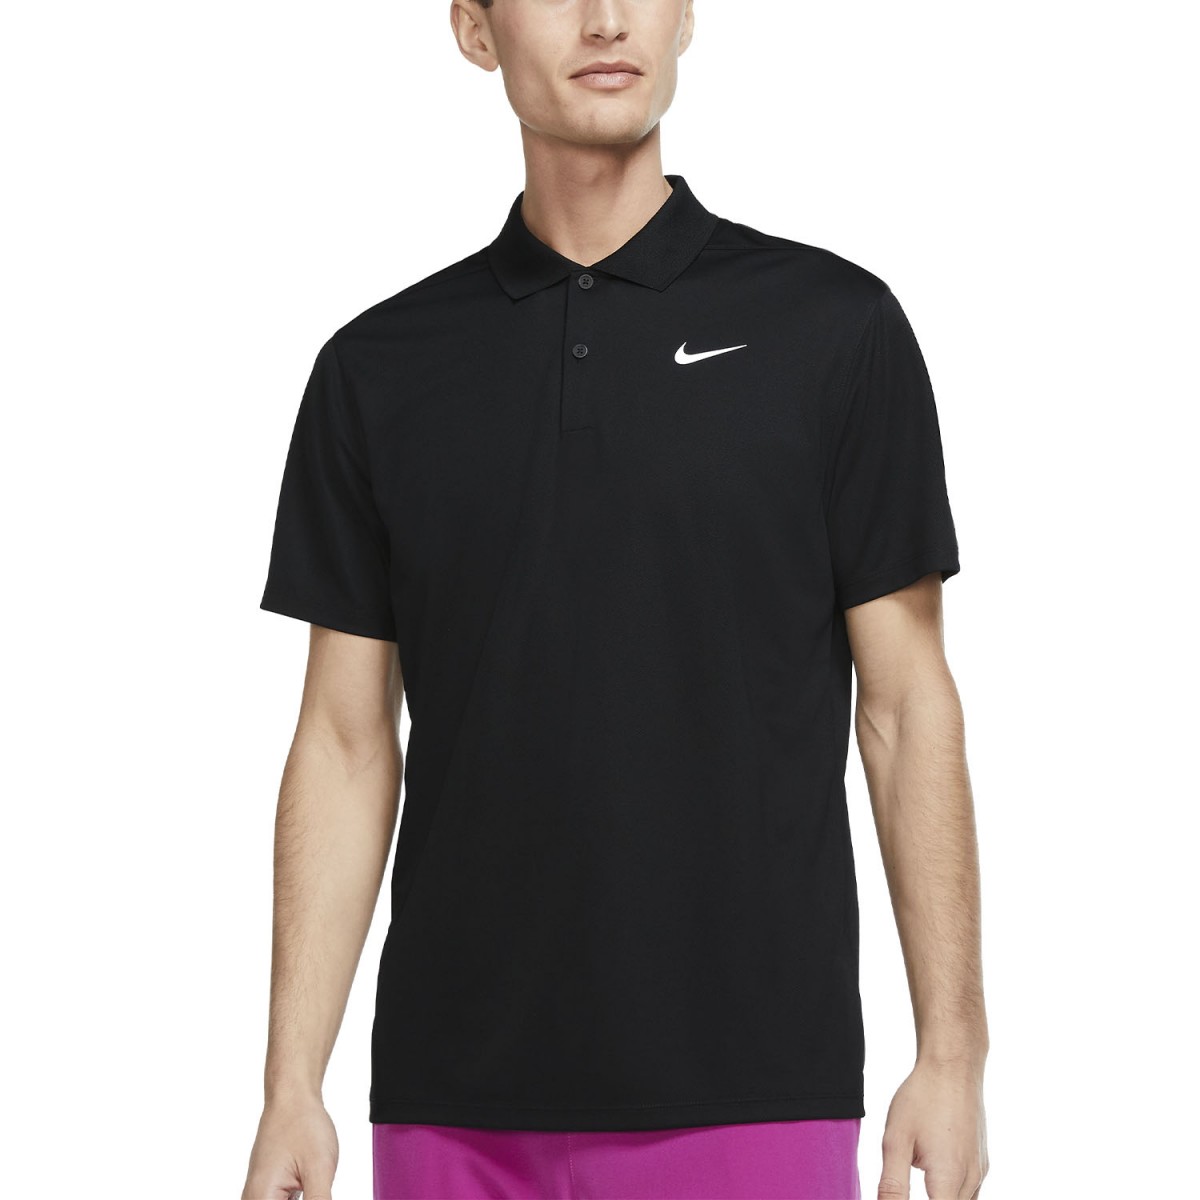 Теннисная футболка мужская Nike Core Pique Polo black/white